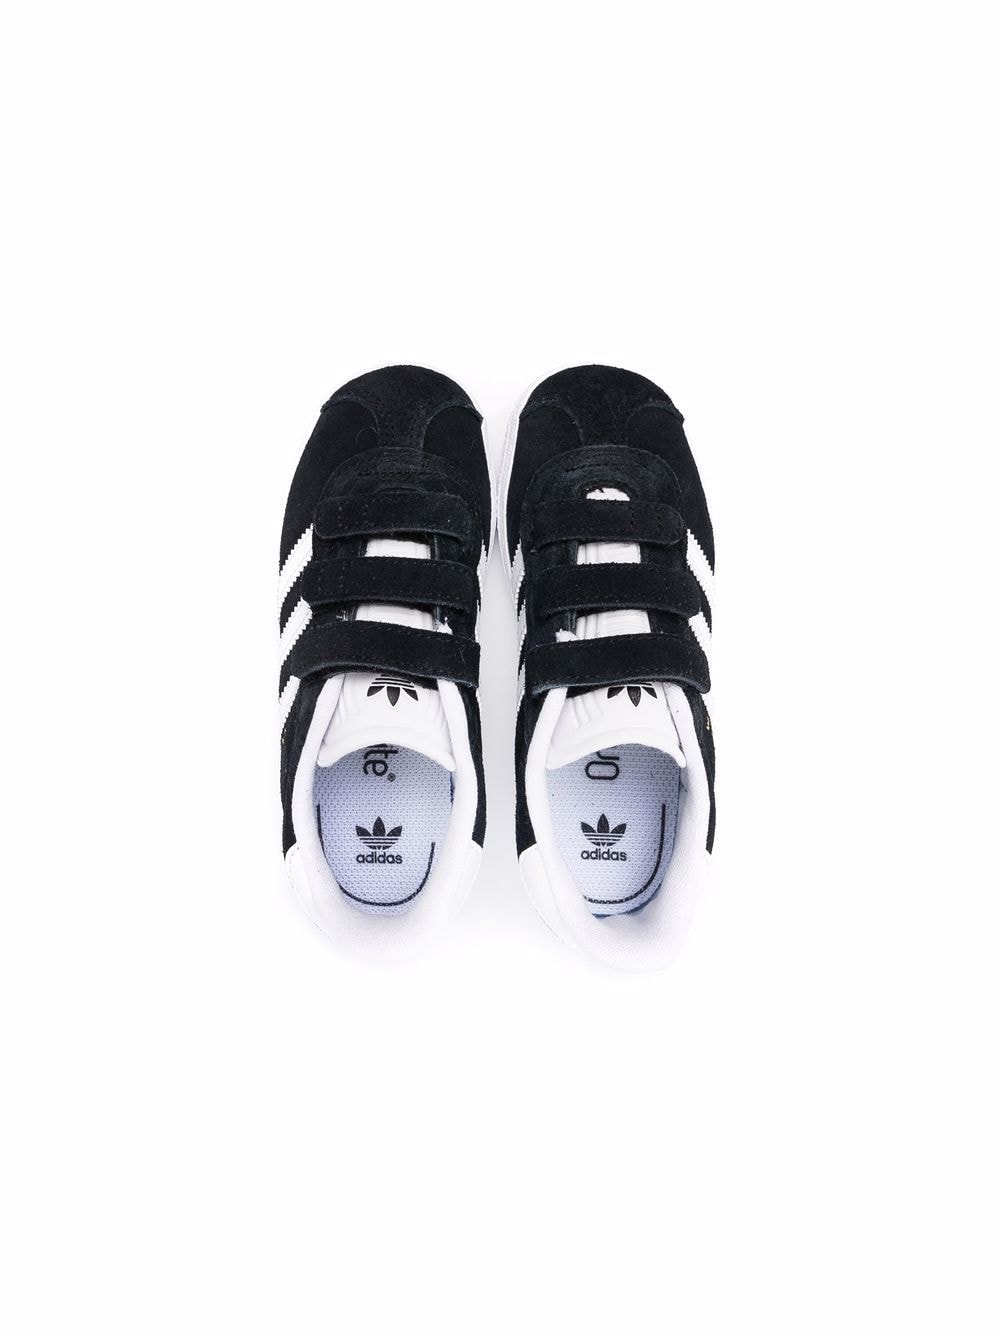 Adidas Kids Gazelle touch-strap - Farfetch